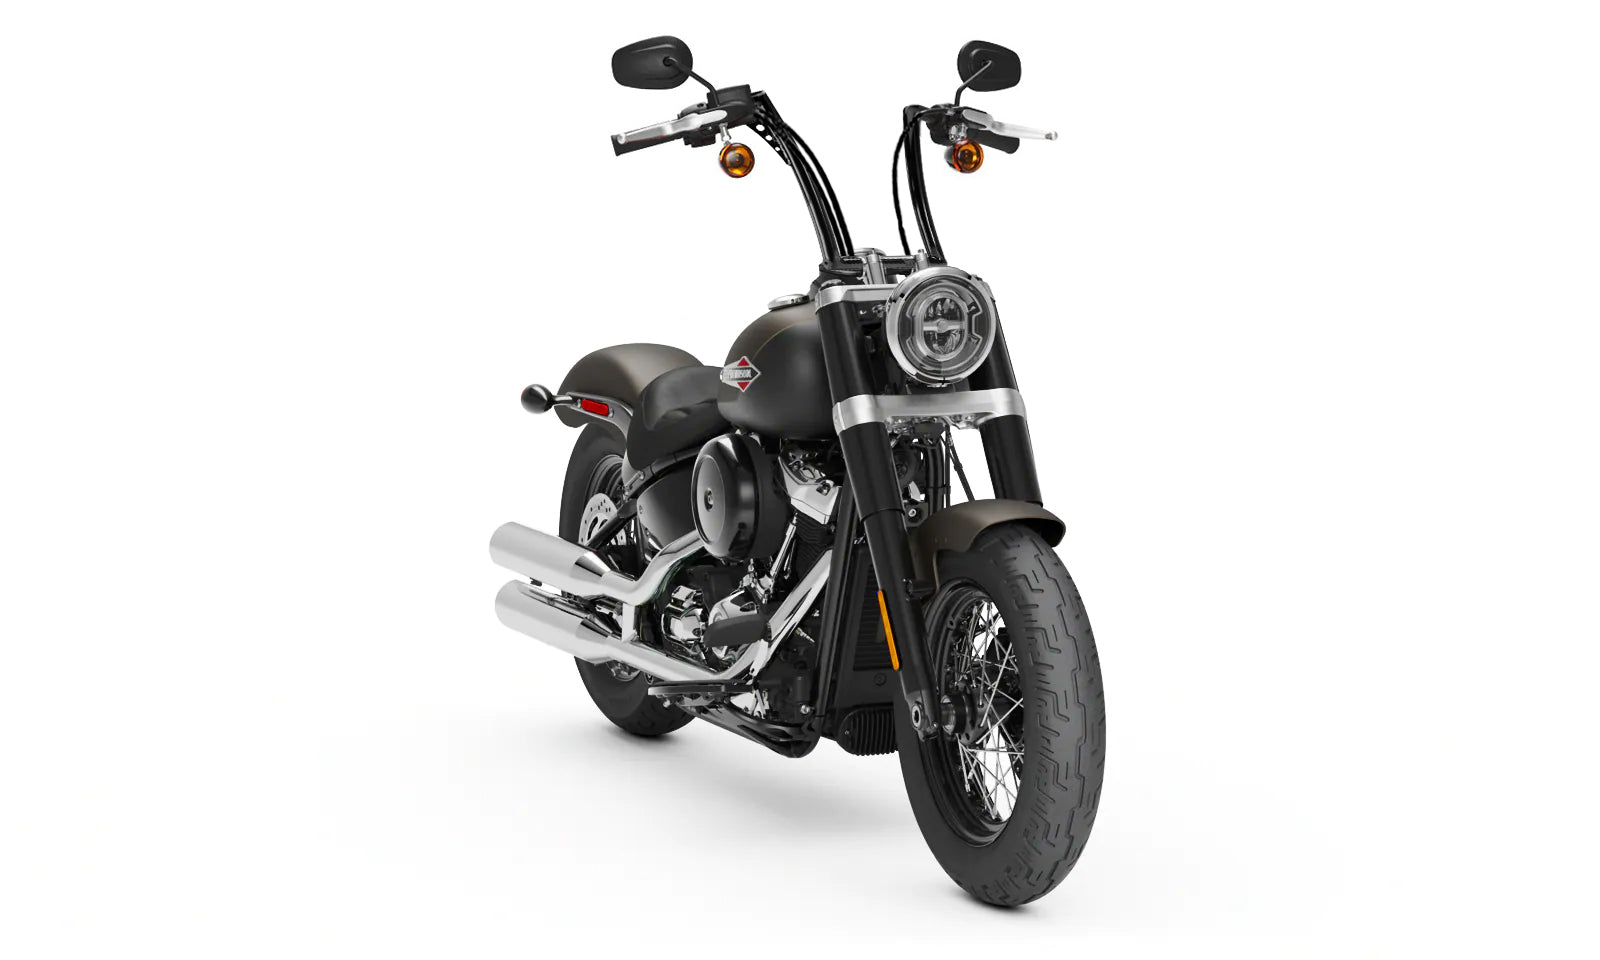 Viking Iron Born 12" Handlebar For Harley Softail Slim FLS Gloss Black Bag on Bike View @expand